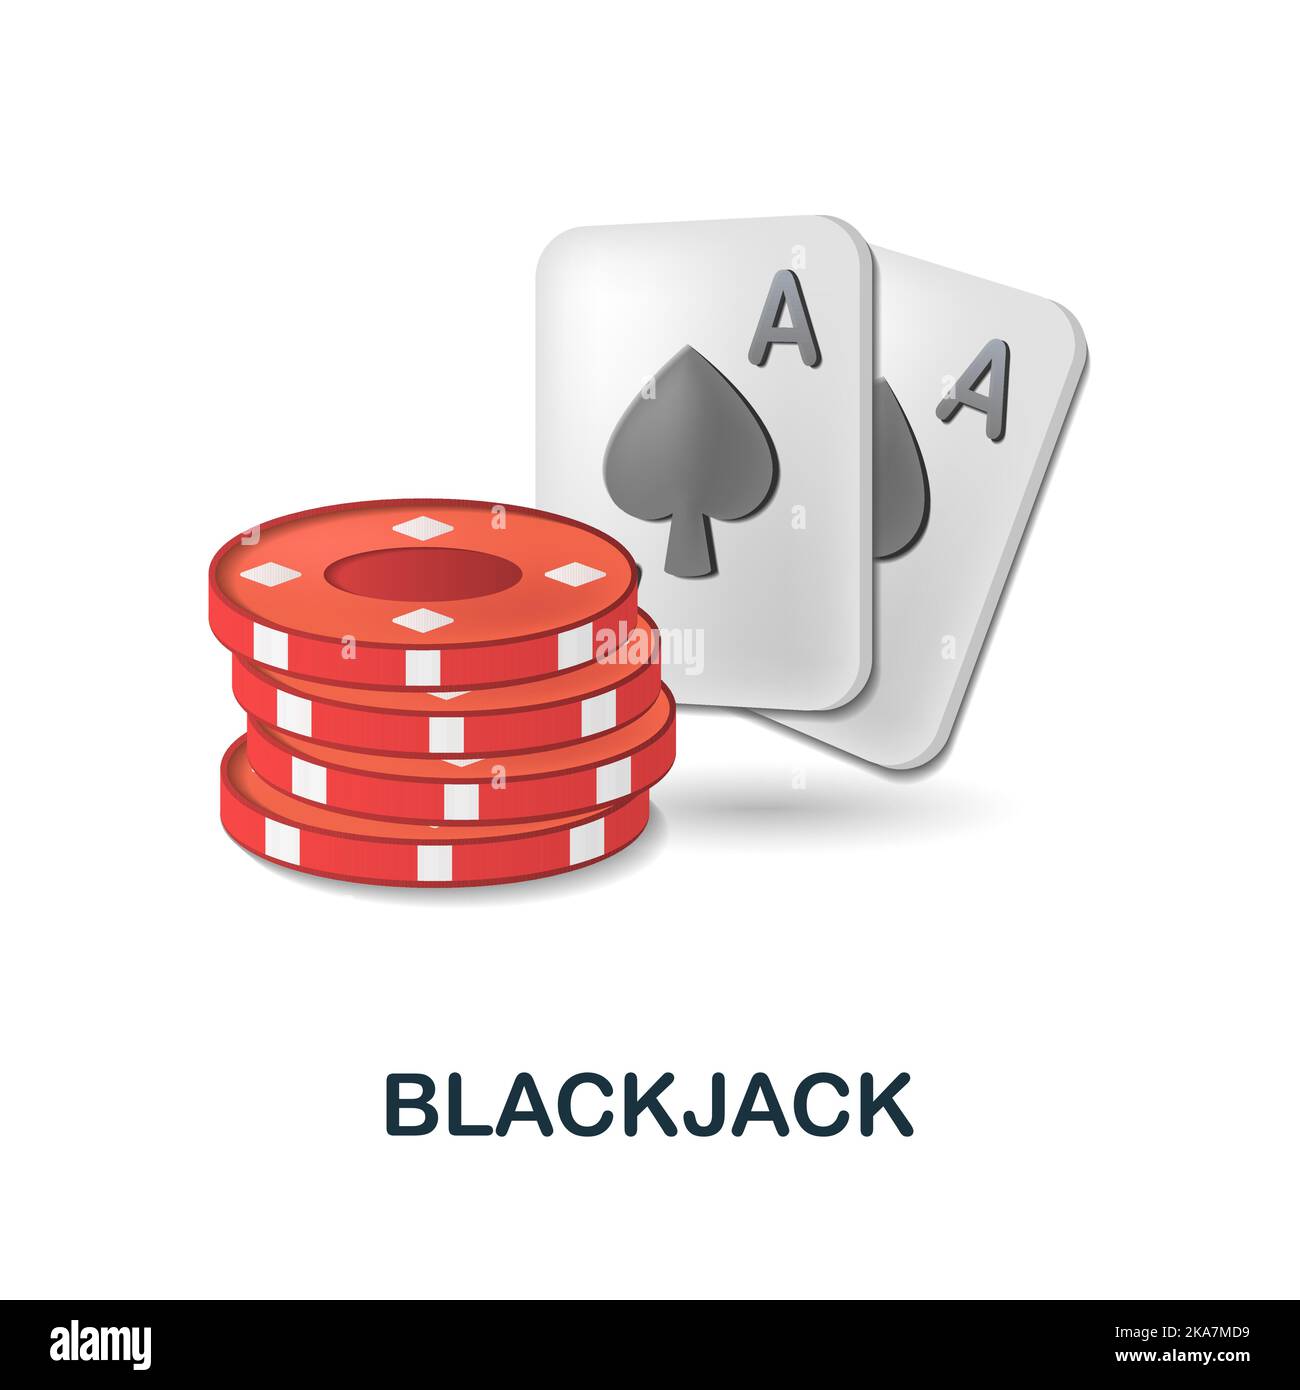 site para jogar black jack